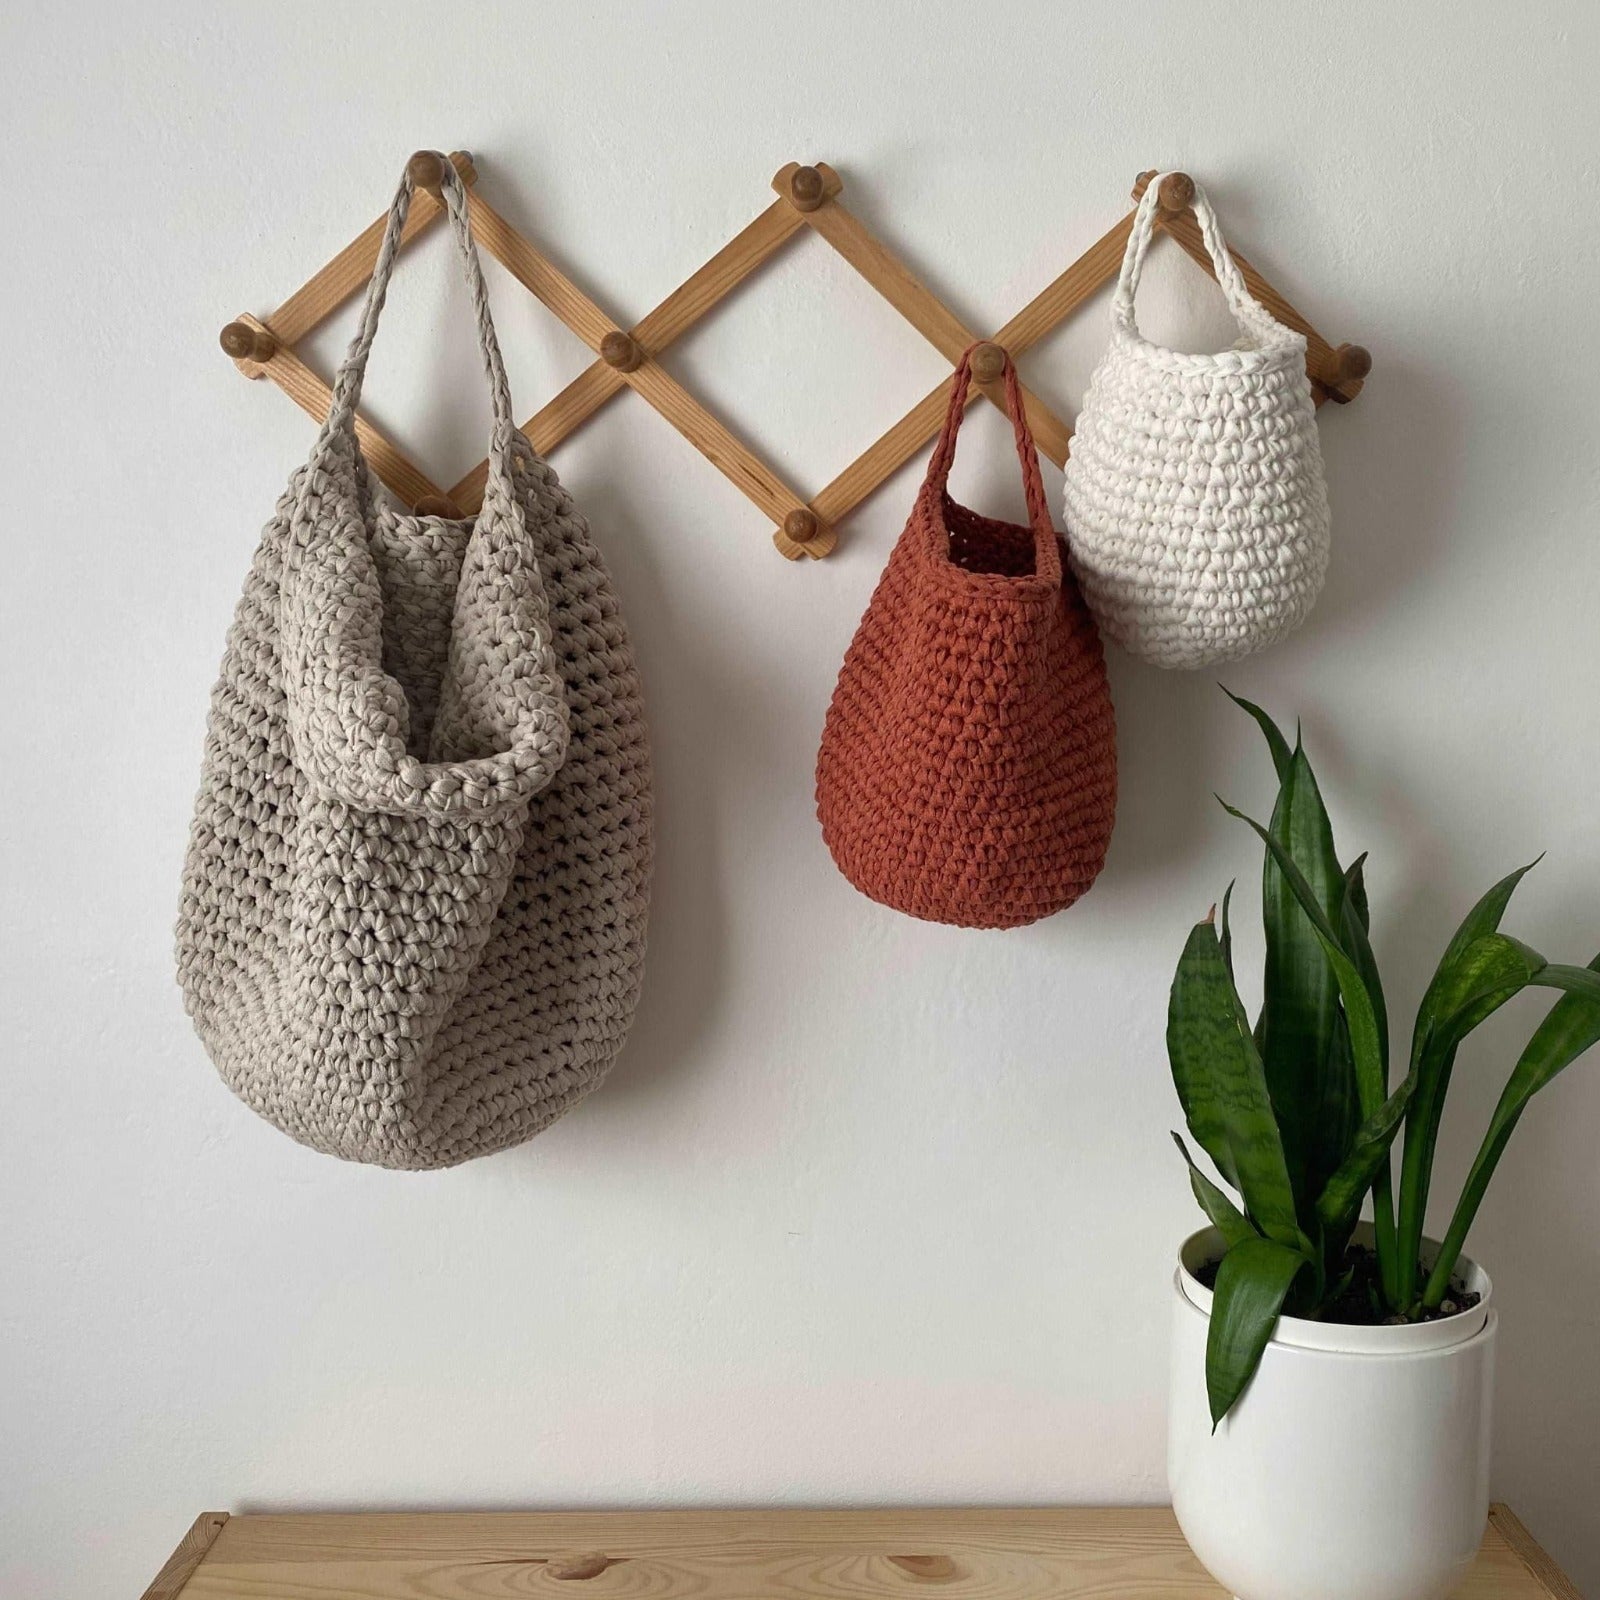 Crochet Hanging Baskets, Mint Kids Room Wall Storage Bags - Looping Home